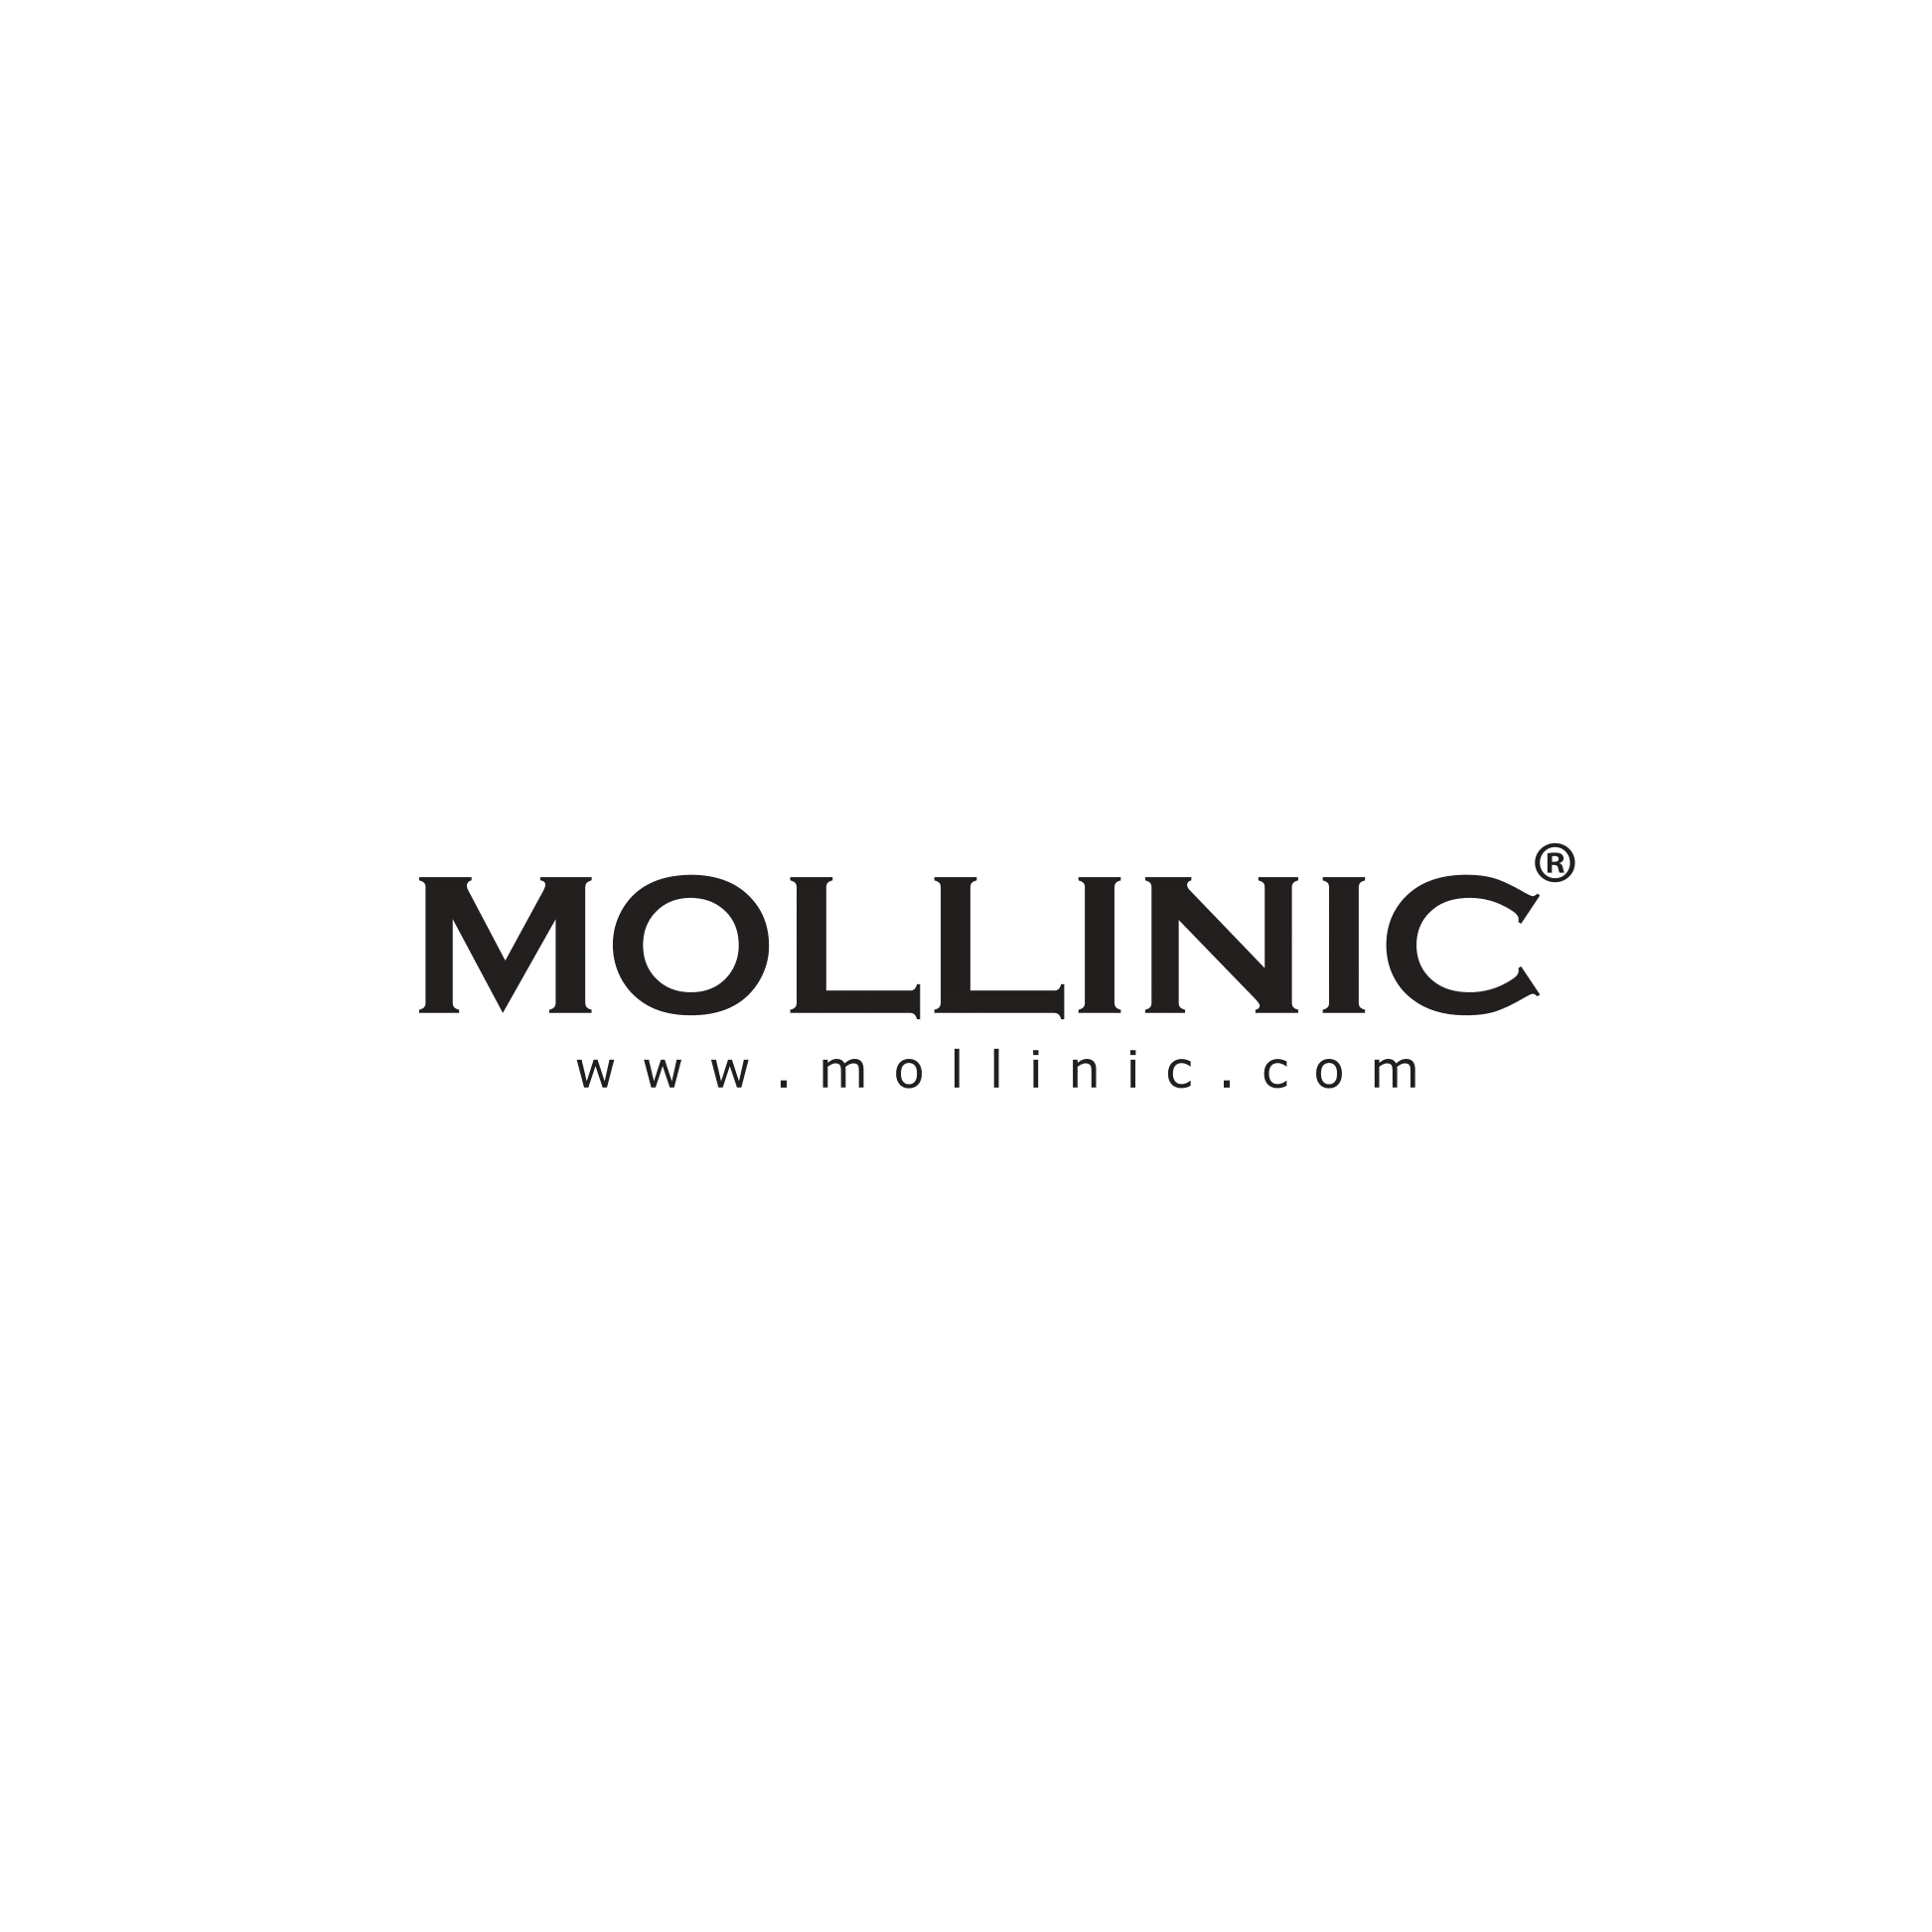 Mollinic Shoes